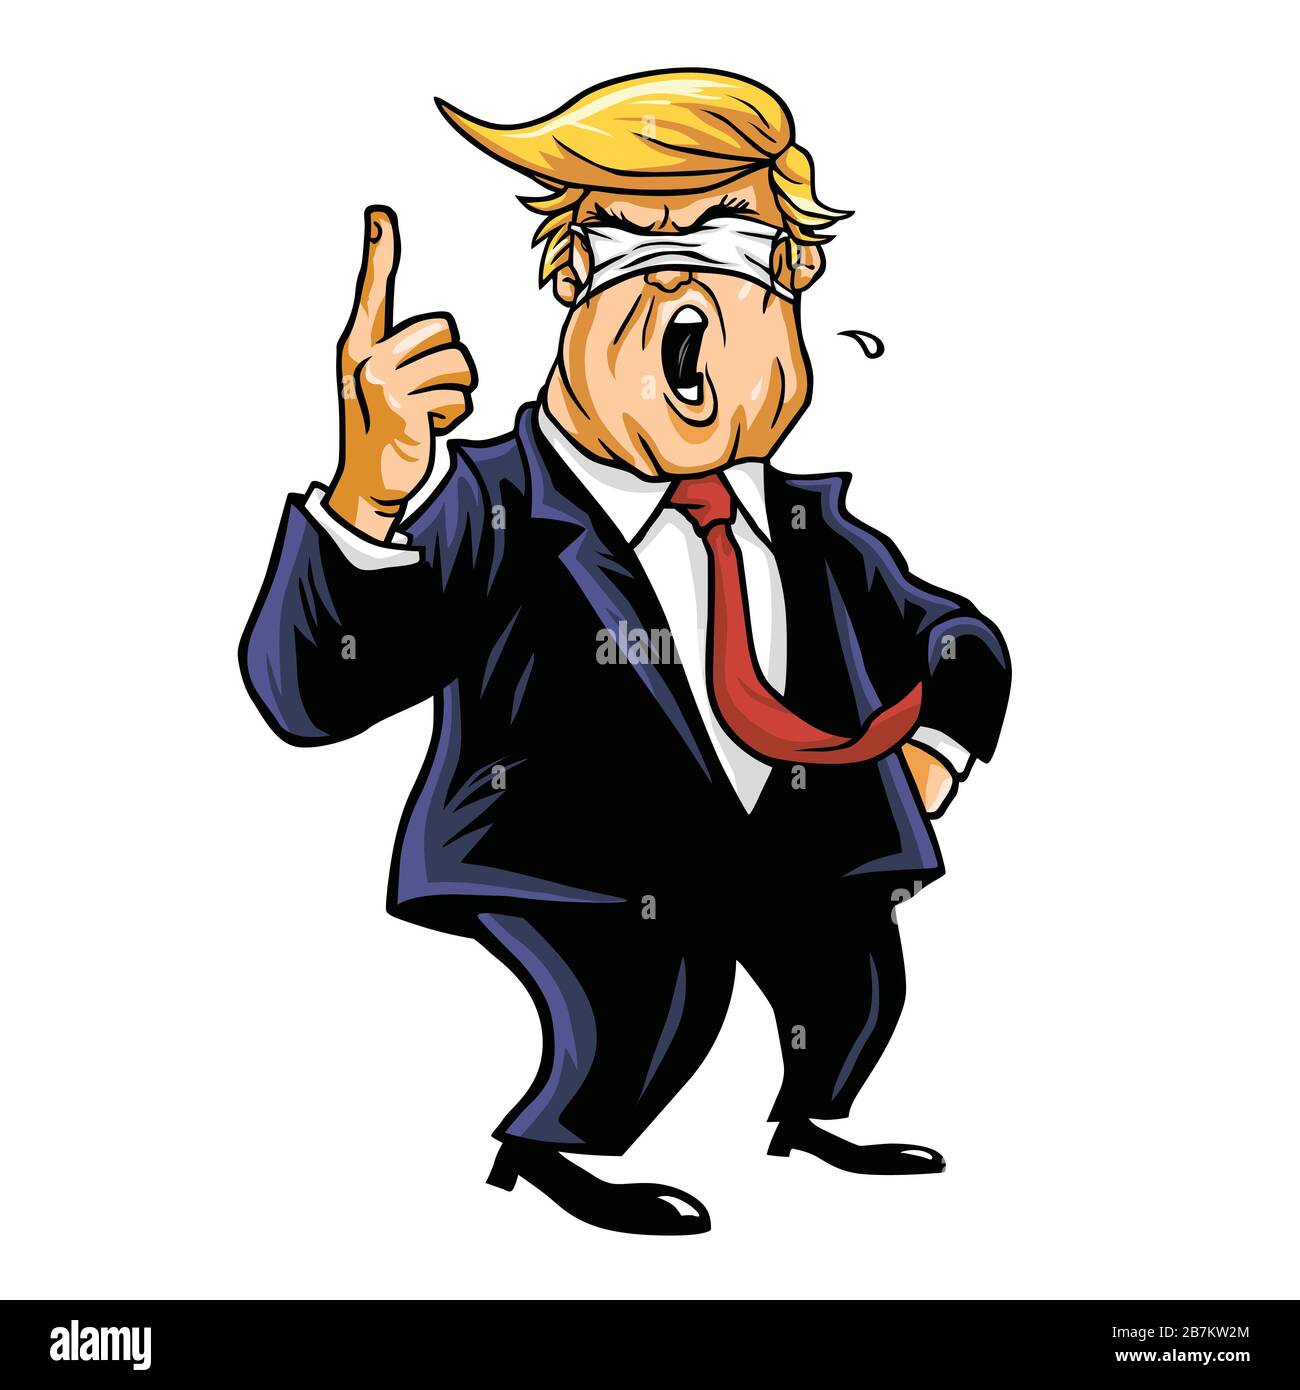 Donald Trump mit Anti Corona Virus Covid 19 Maske auf Augen verblindete Cartoon Vector Drawing. März 2020 Stock Vektor